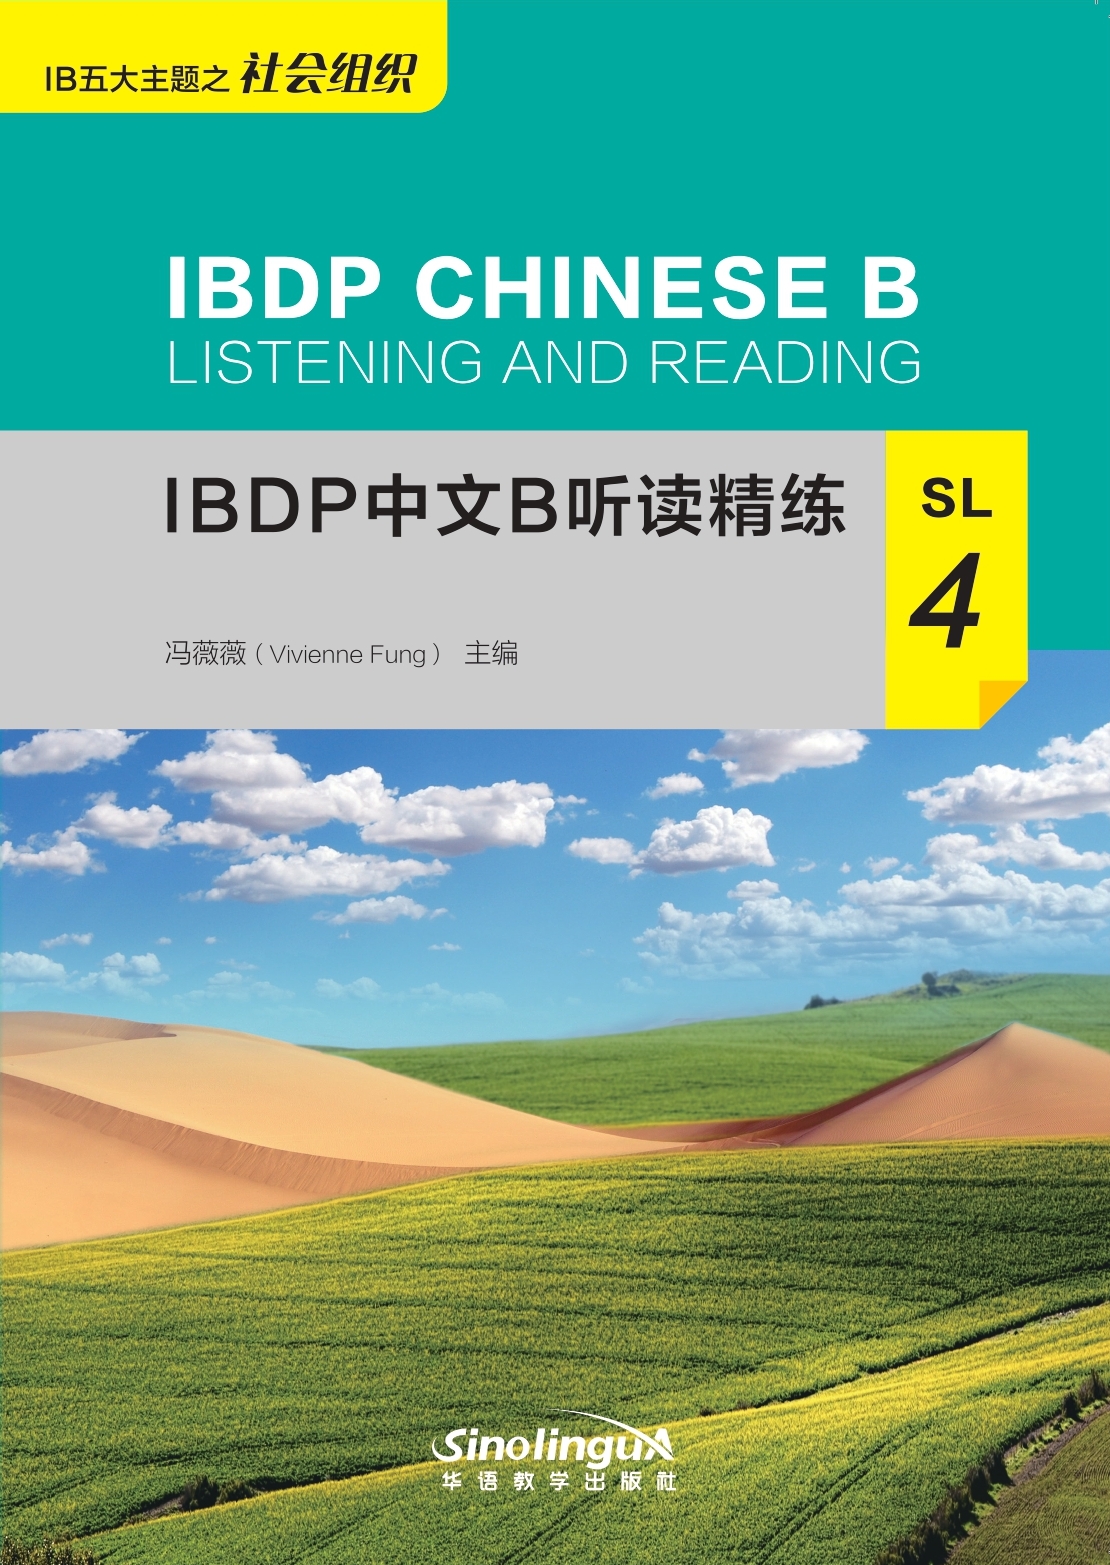 IBDP Chinese B Listening and Reading·SL·4